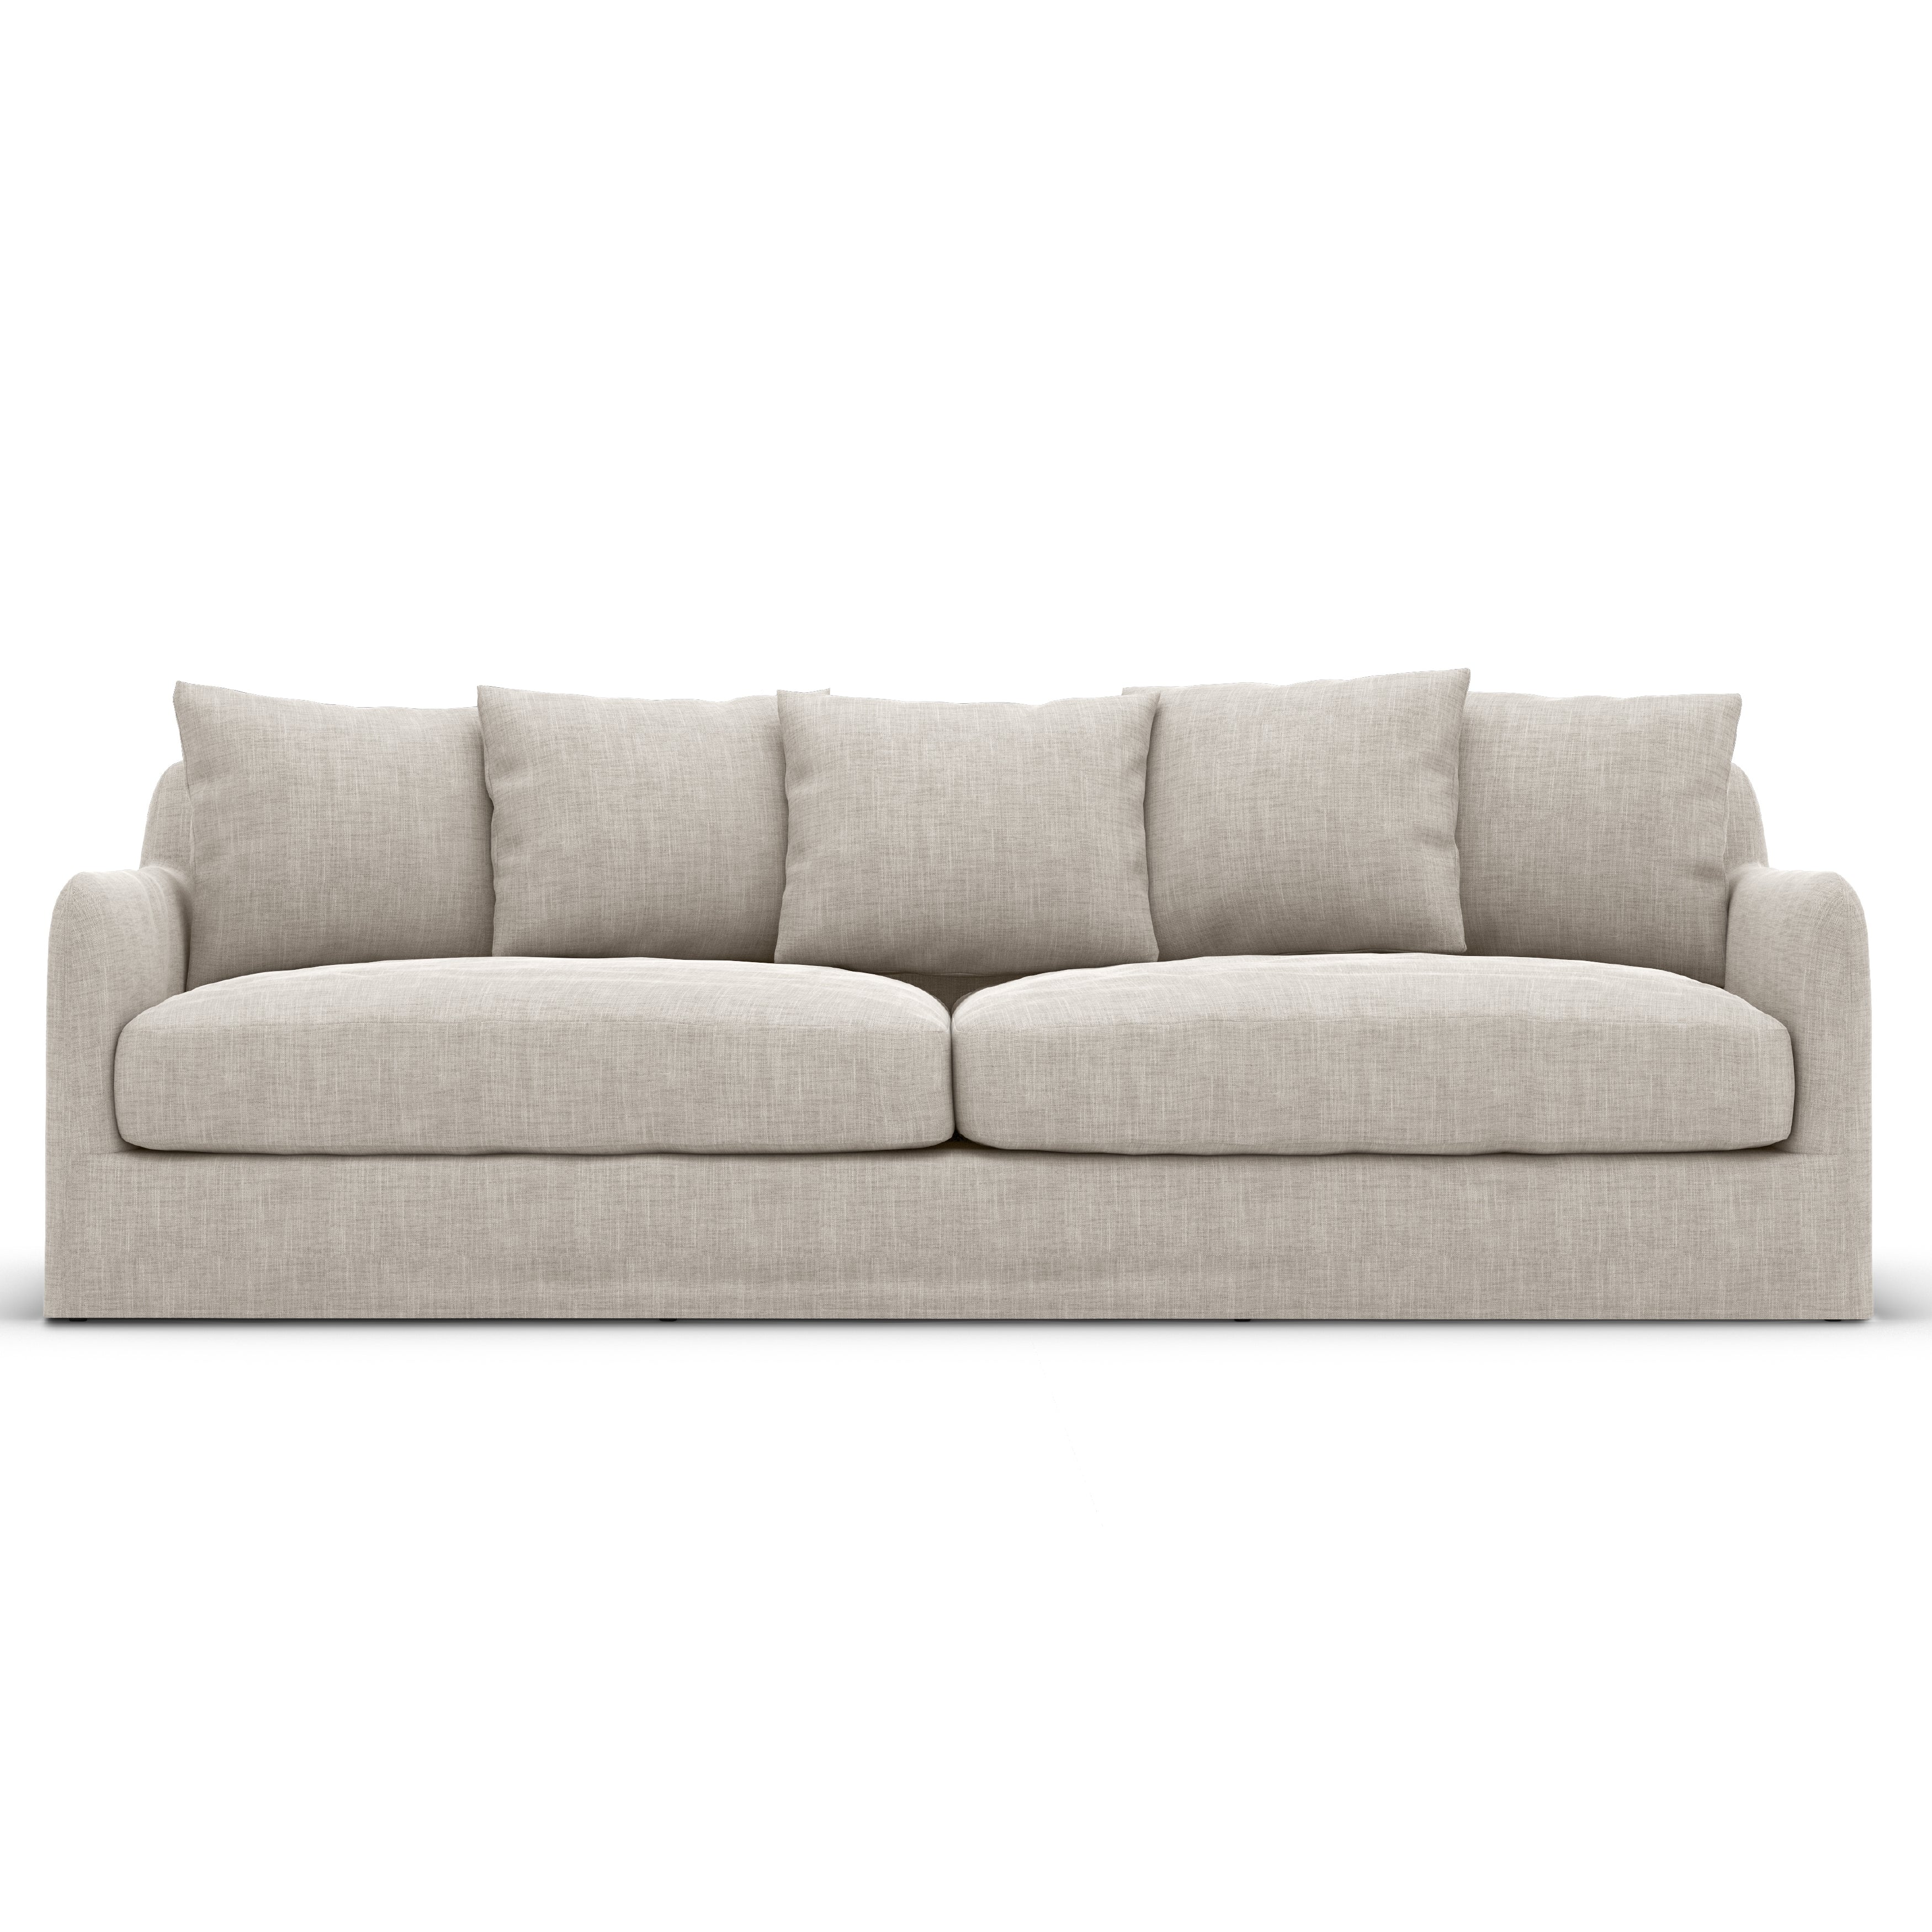 nova upholstered outdoor sofa for magnolia